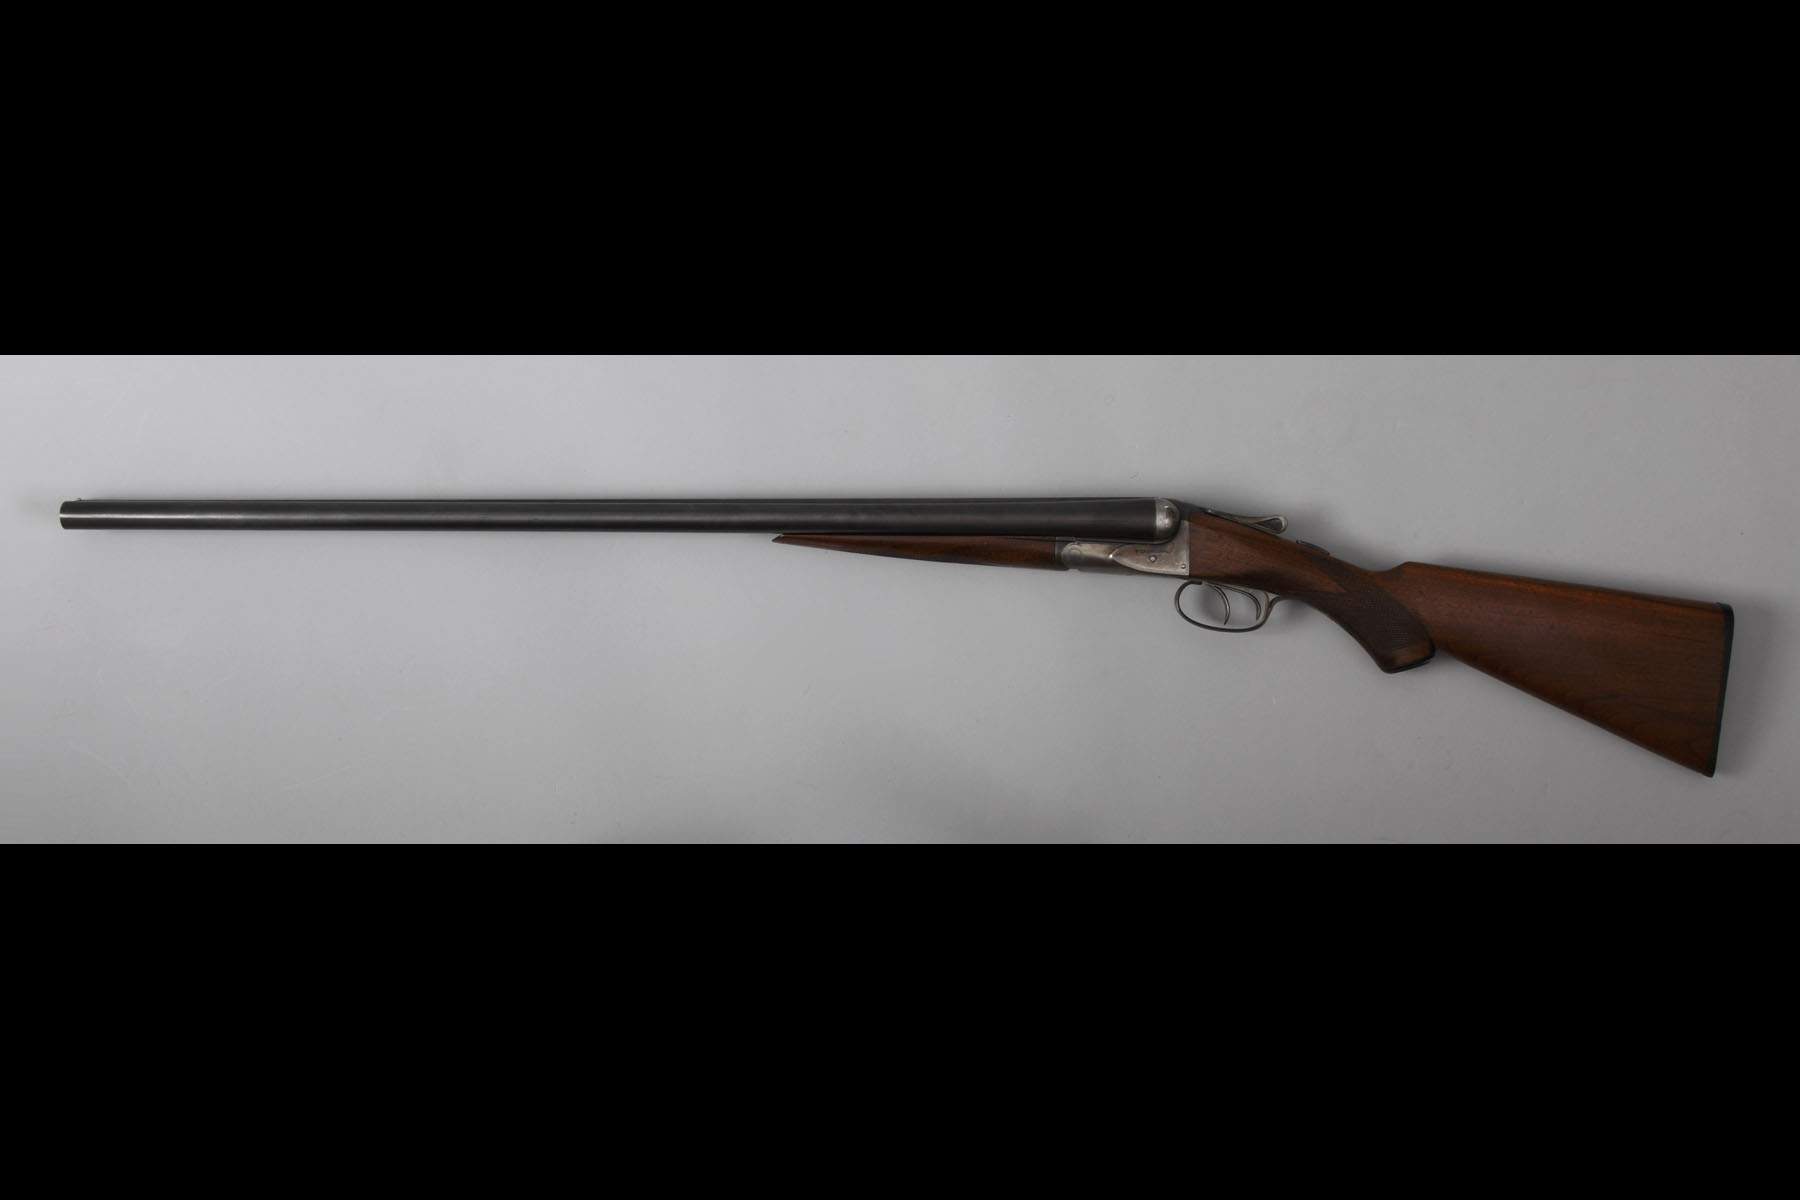 Fox Sterlingworth Double Barrel Shotgun